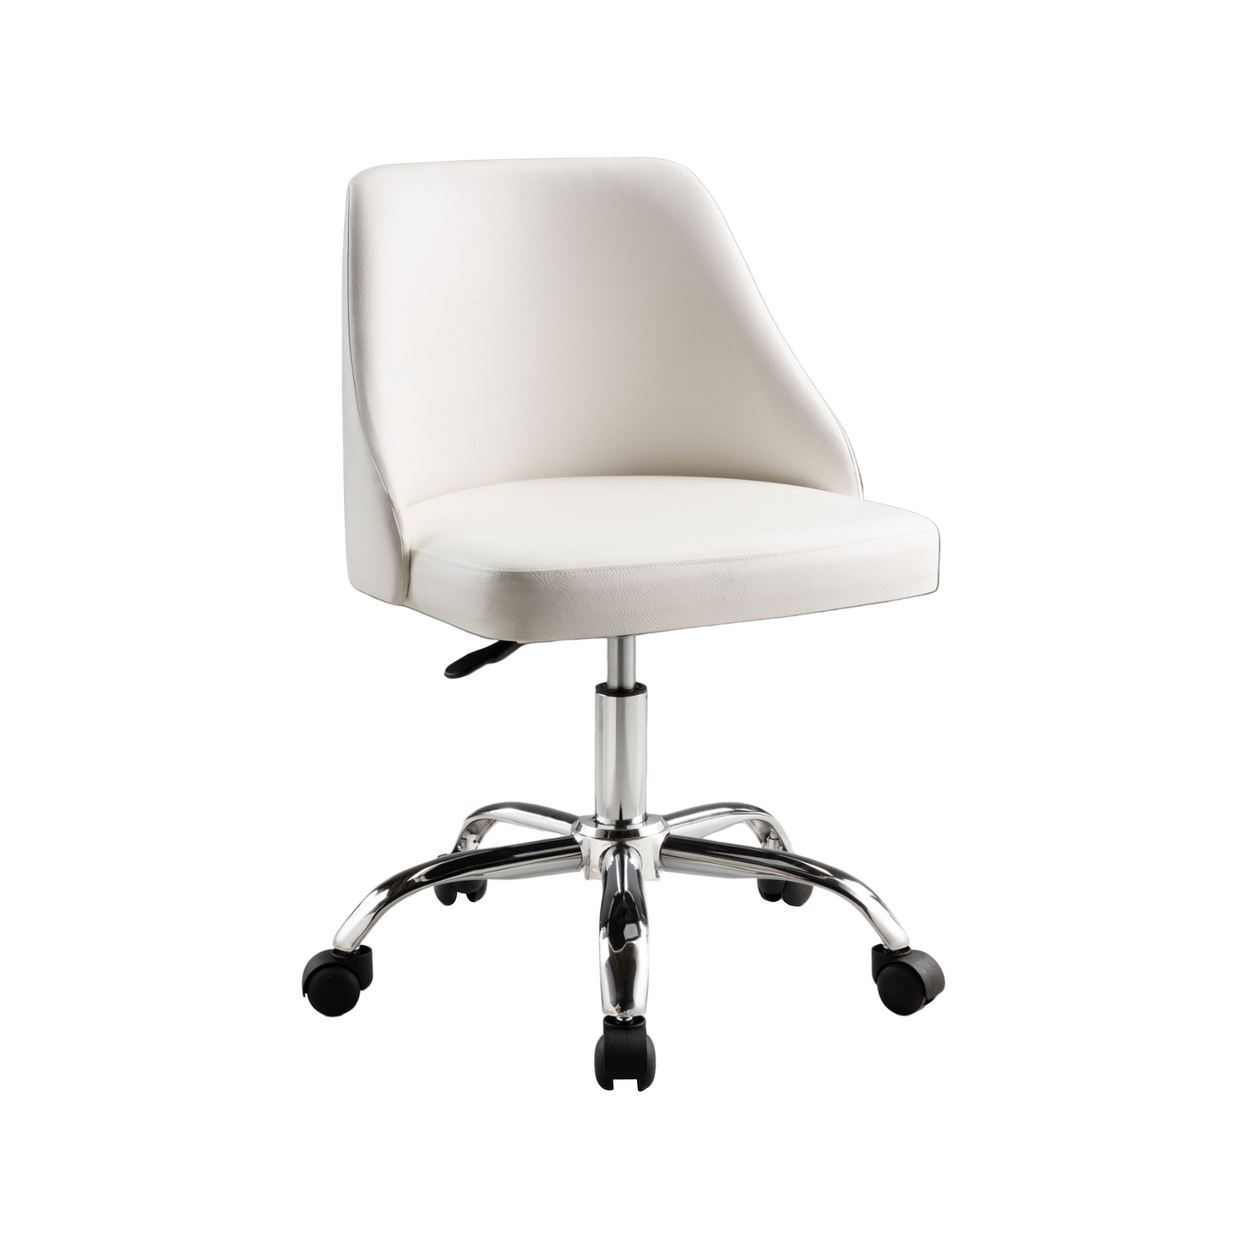 Yim 22 Inch Adjustable Swivel Office Chair, White Faux Leather, Chrome Base - Saltoro Sherpi